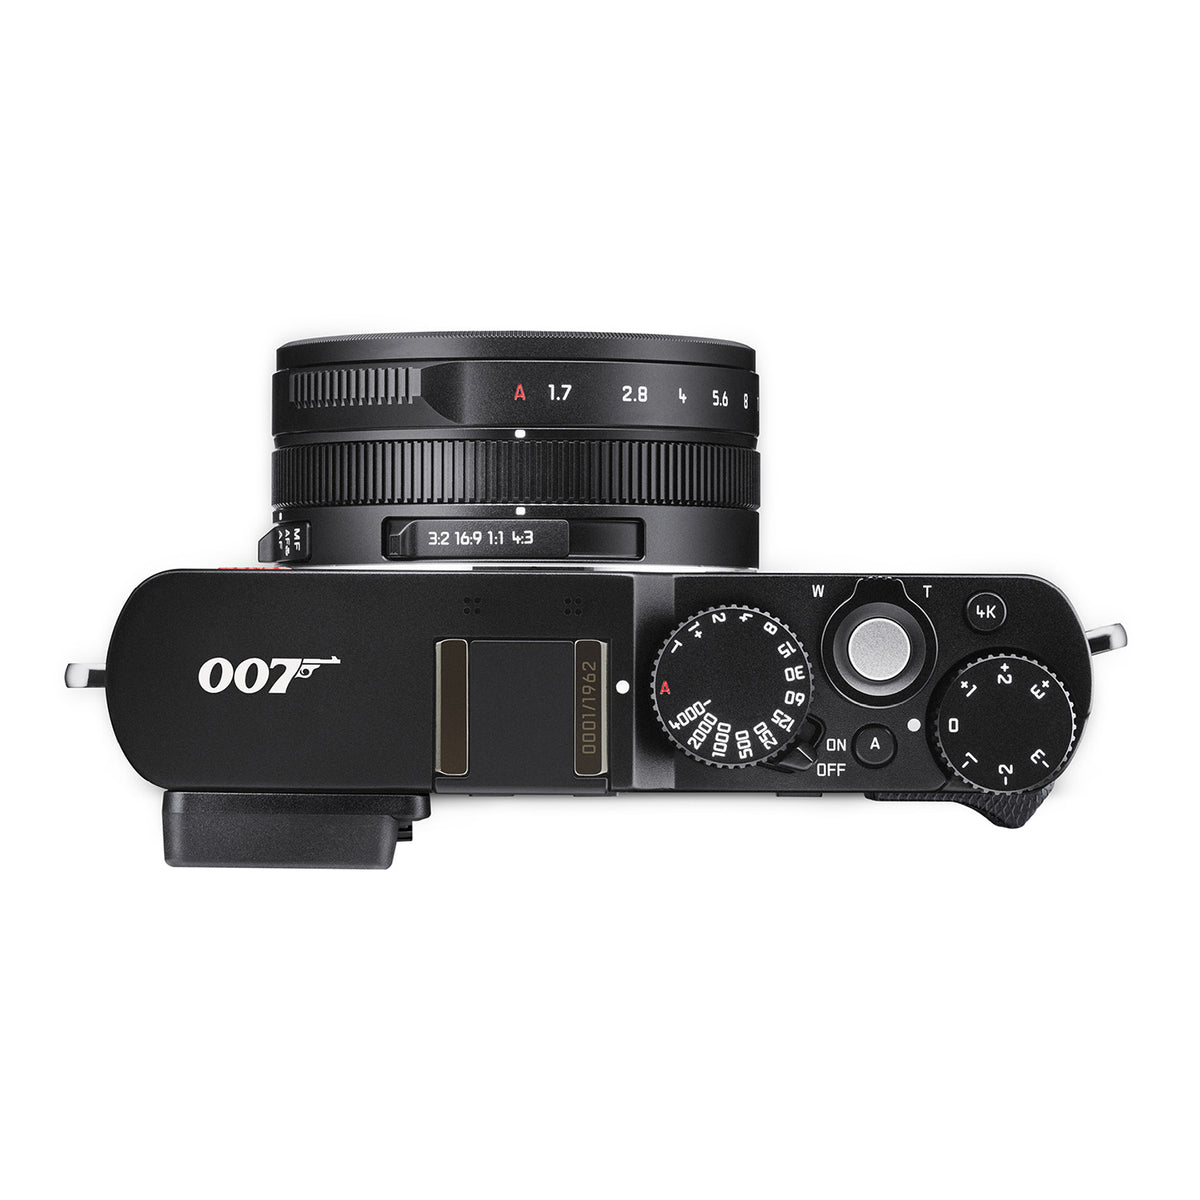 James Bond Leica D-Lux 7 007 Camera